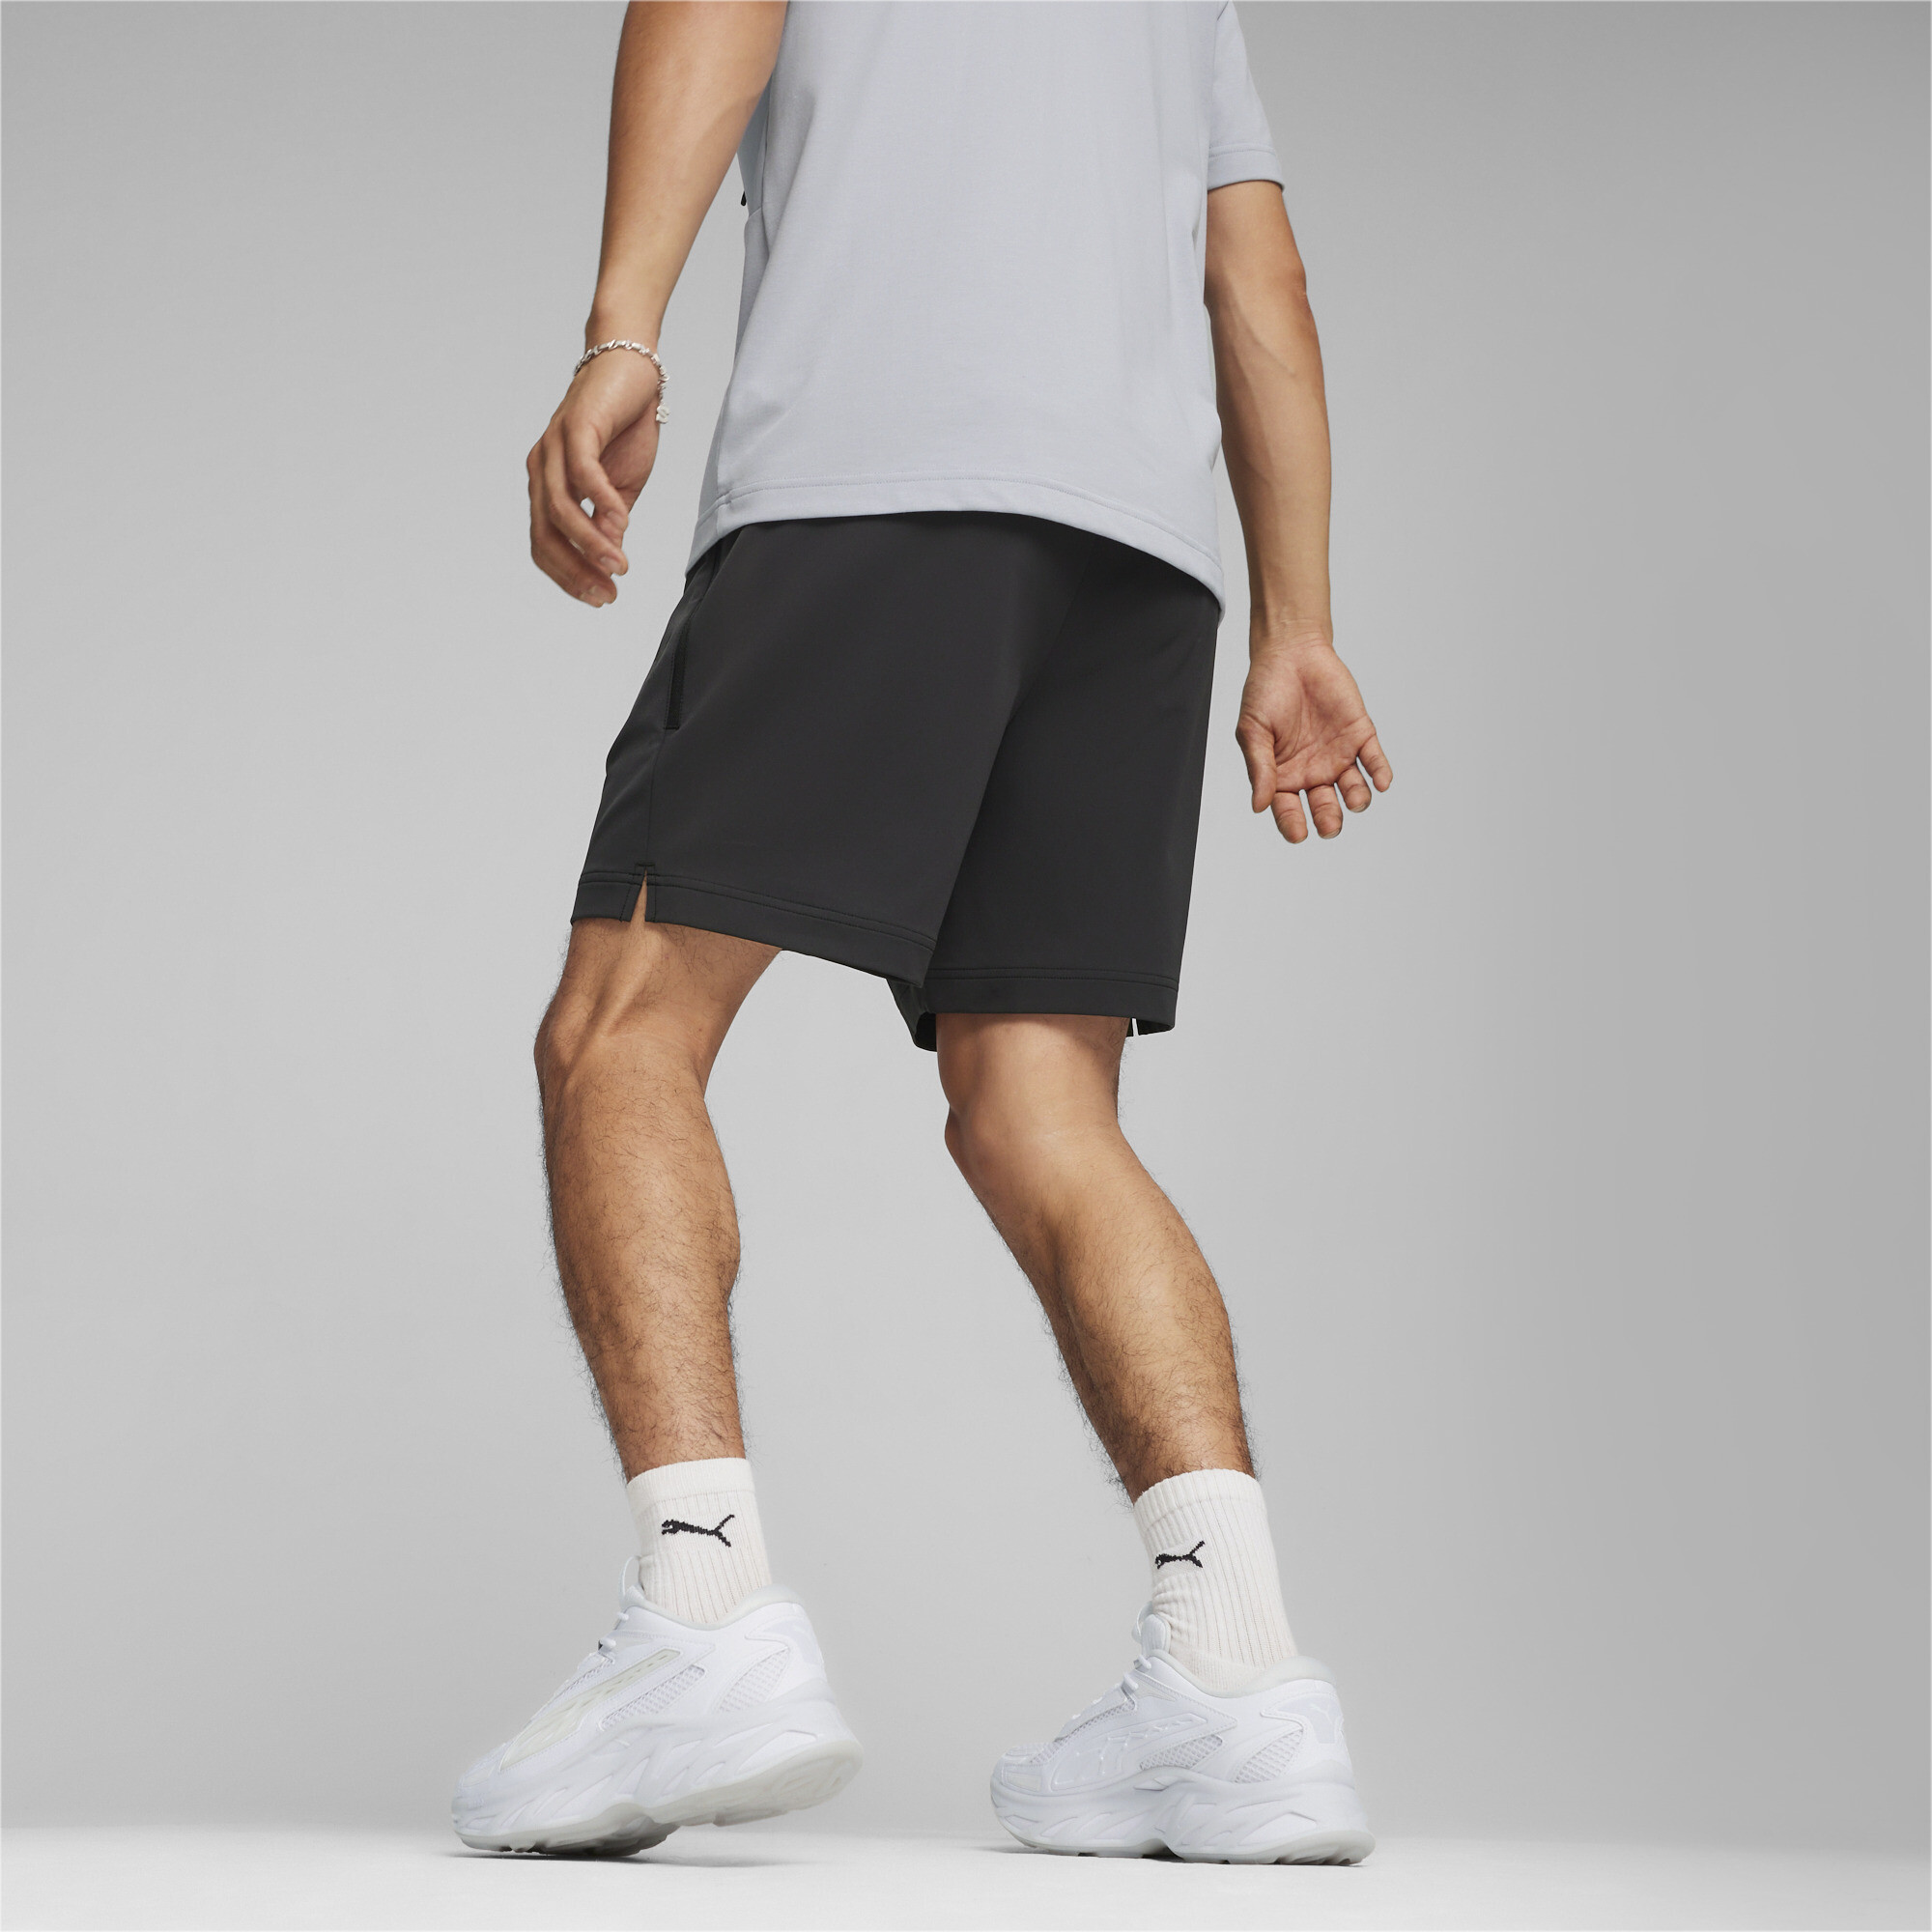 Men's PumaTECH's Shorts, Black, Size S, Clothing